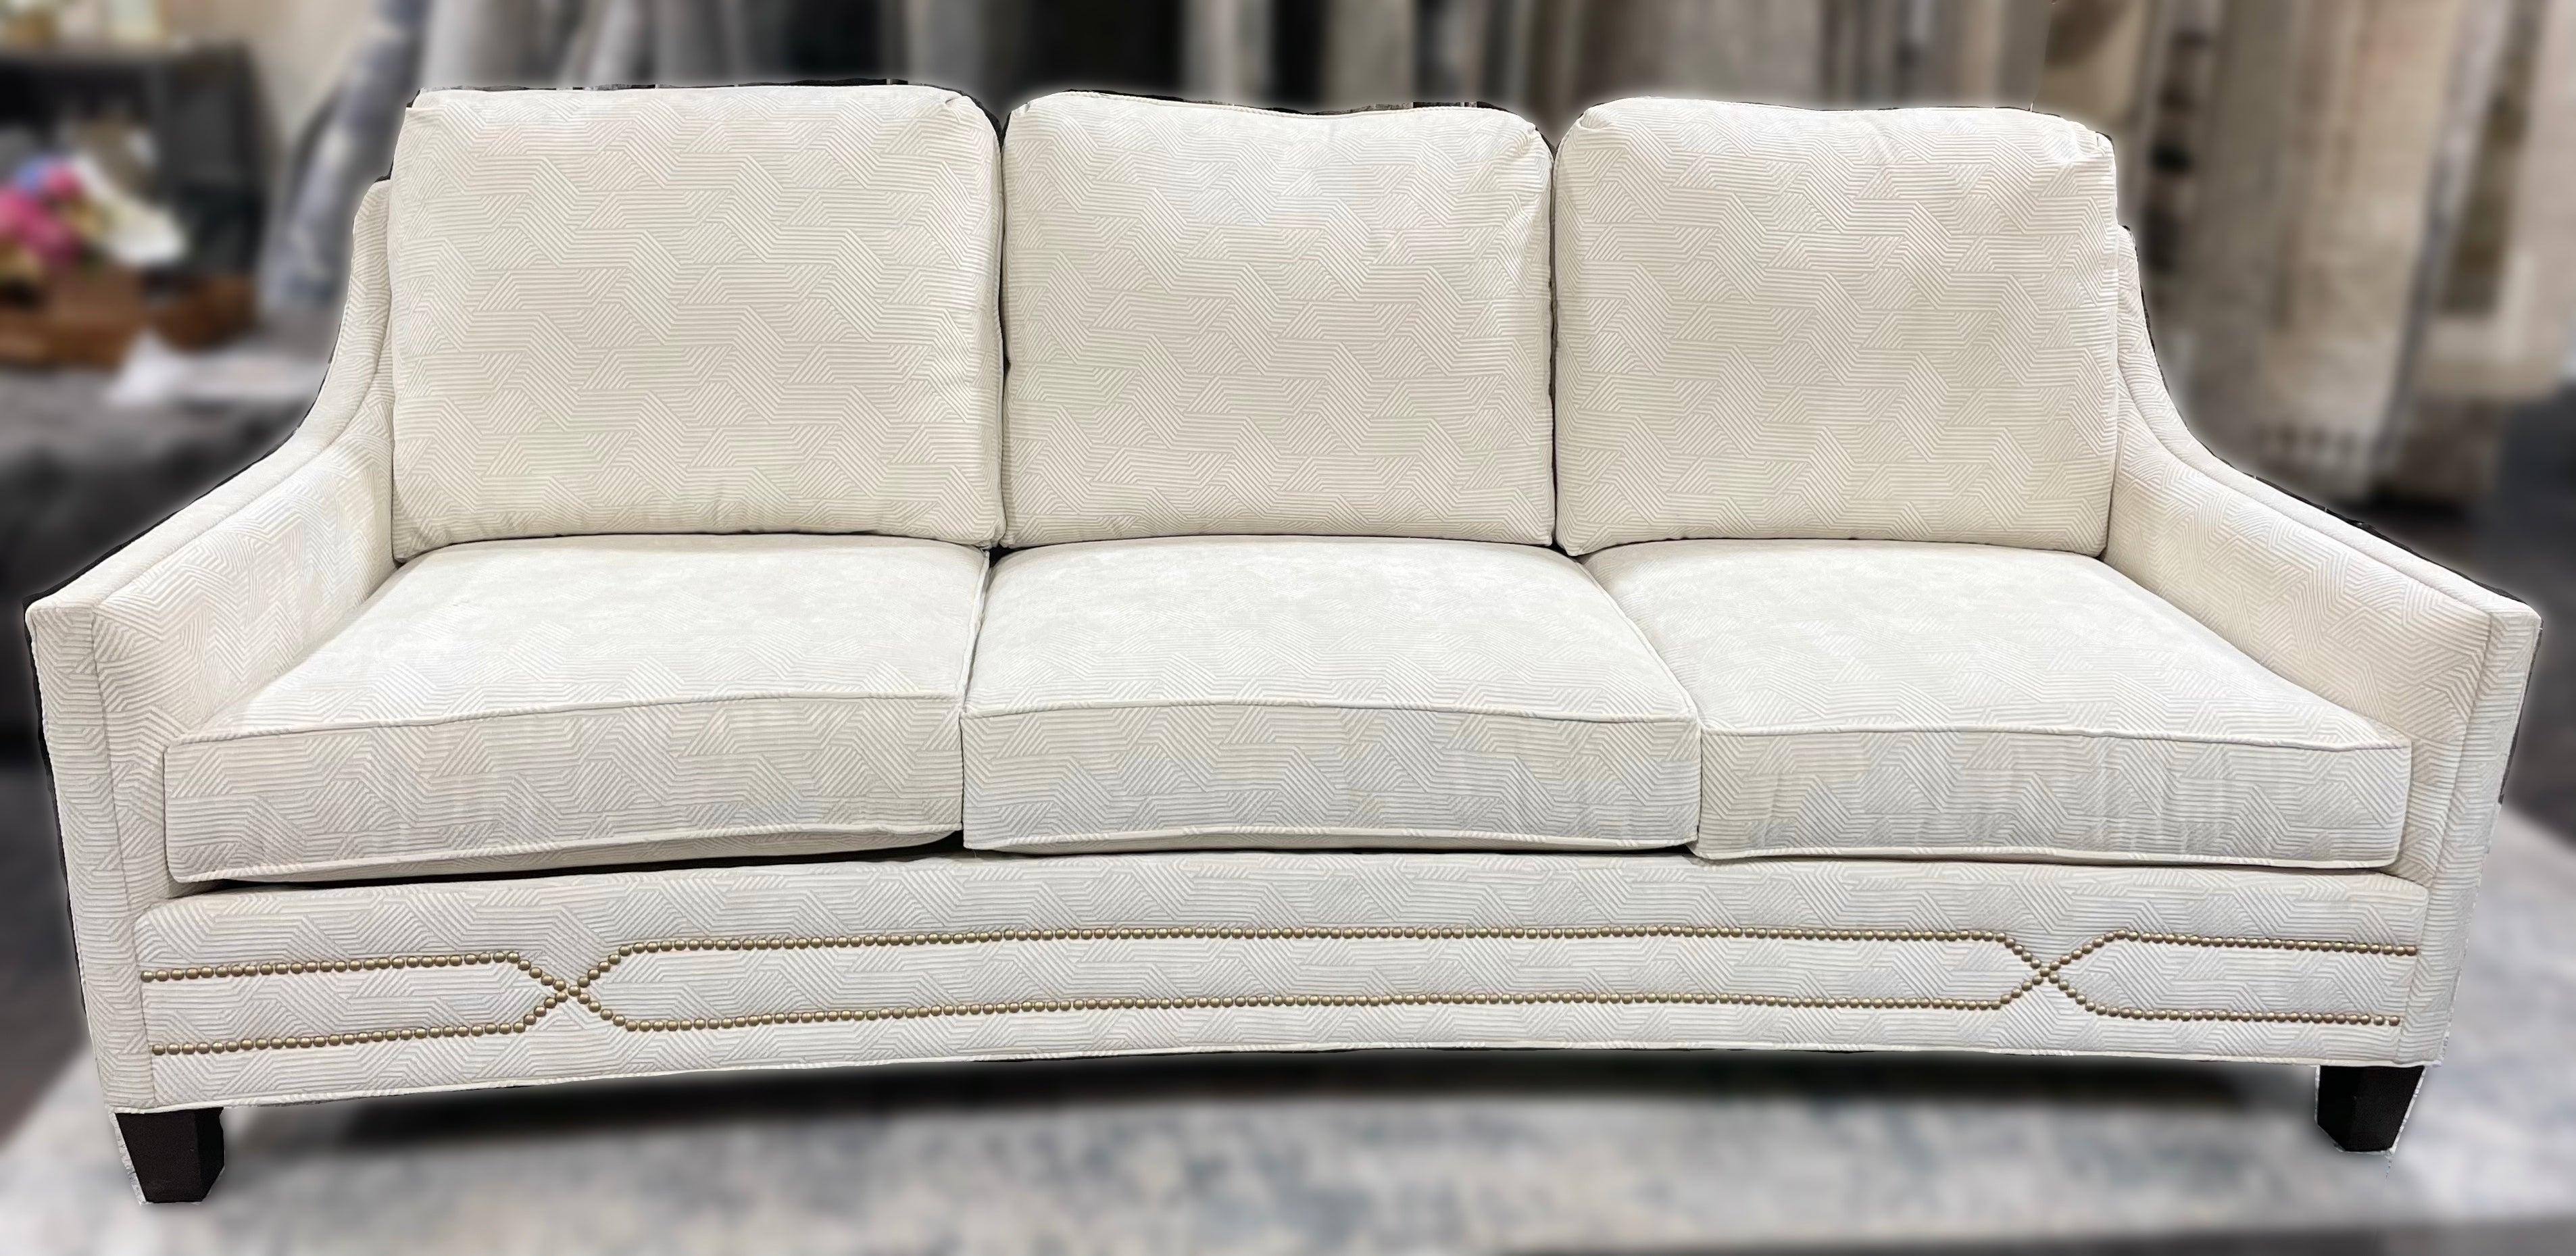 Fairfield cream sofa